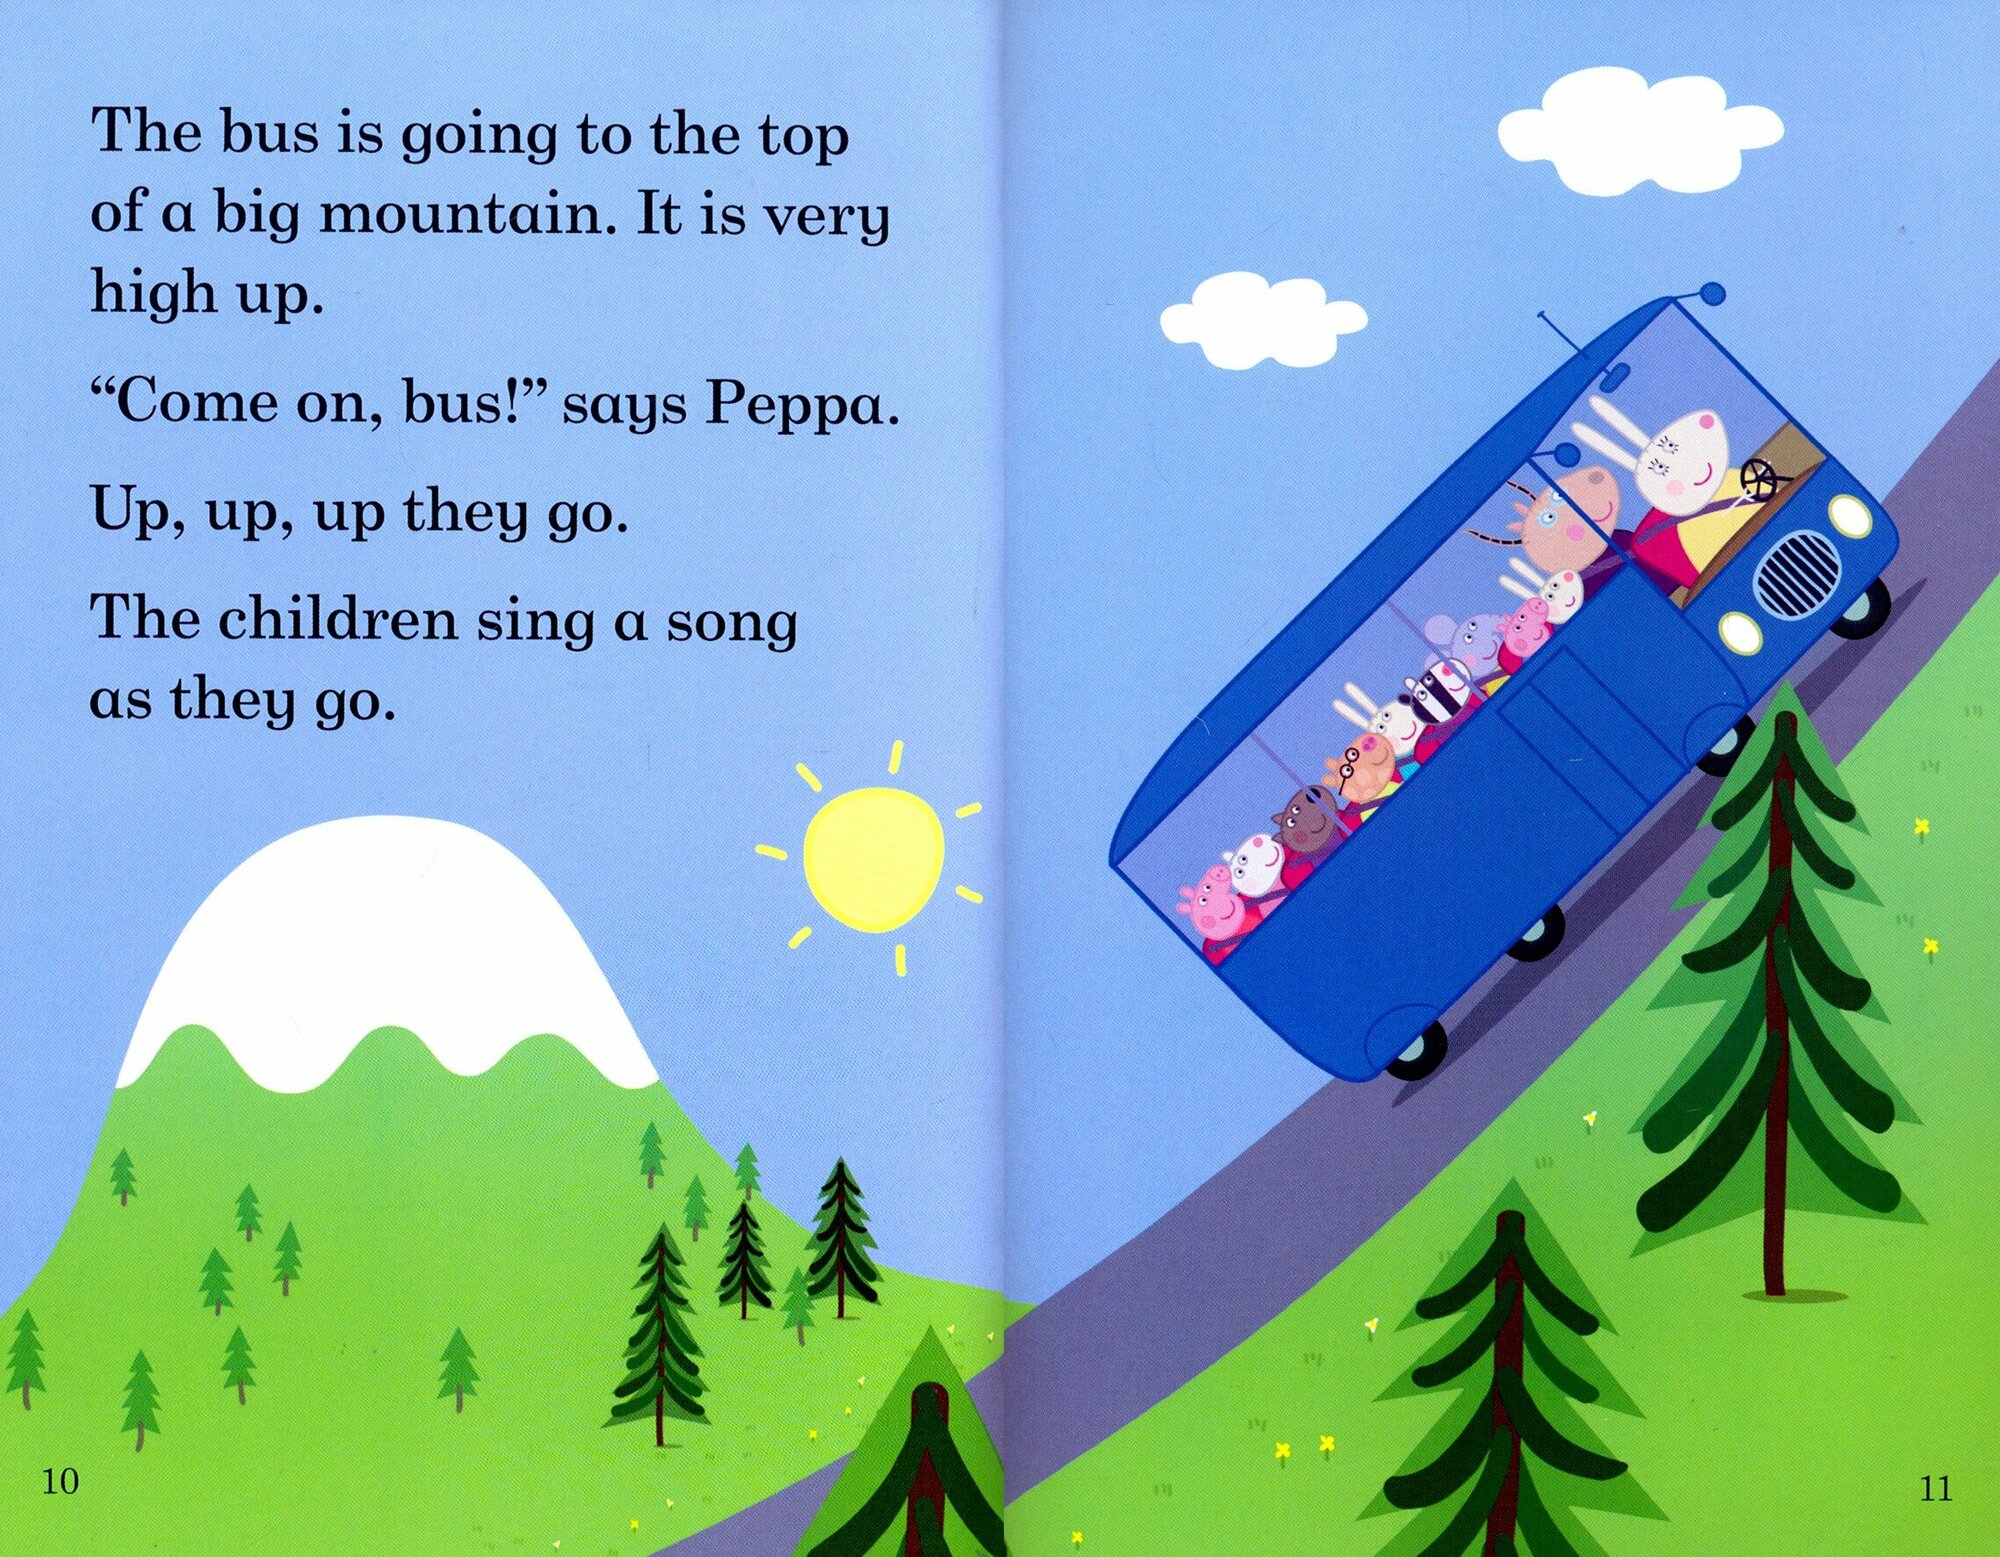 Peppa Pig: School Bus Trip (Автор не указан) - фото №2